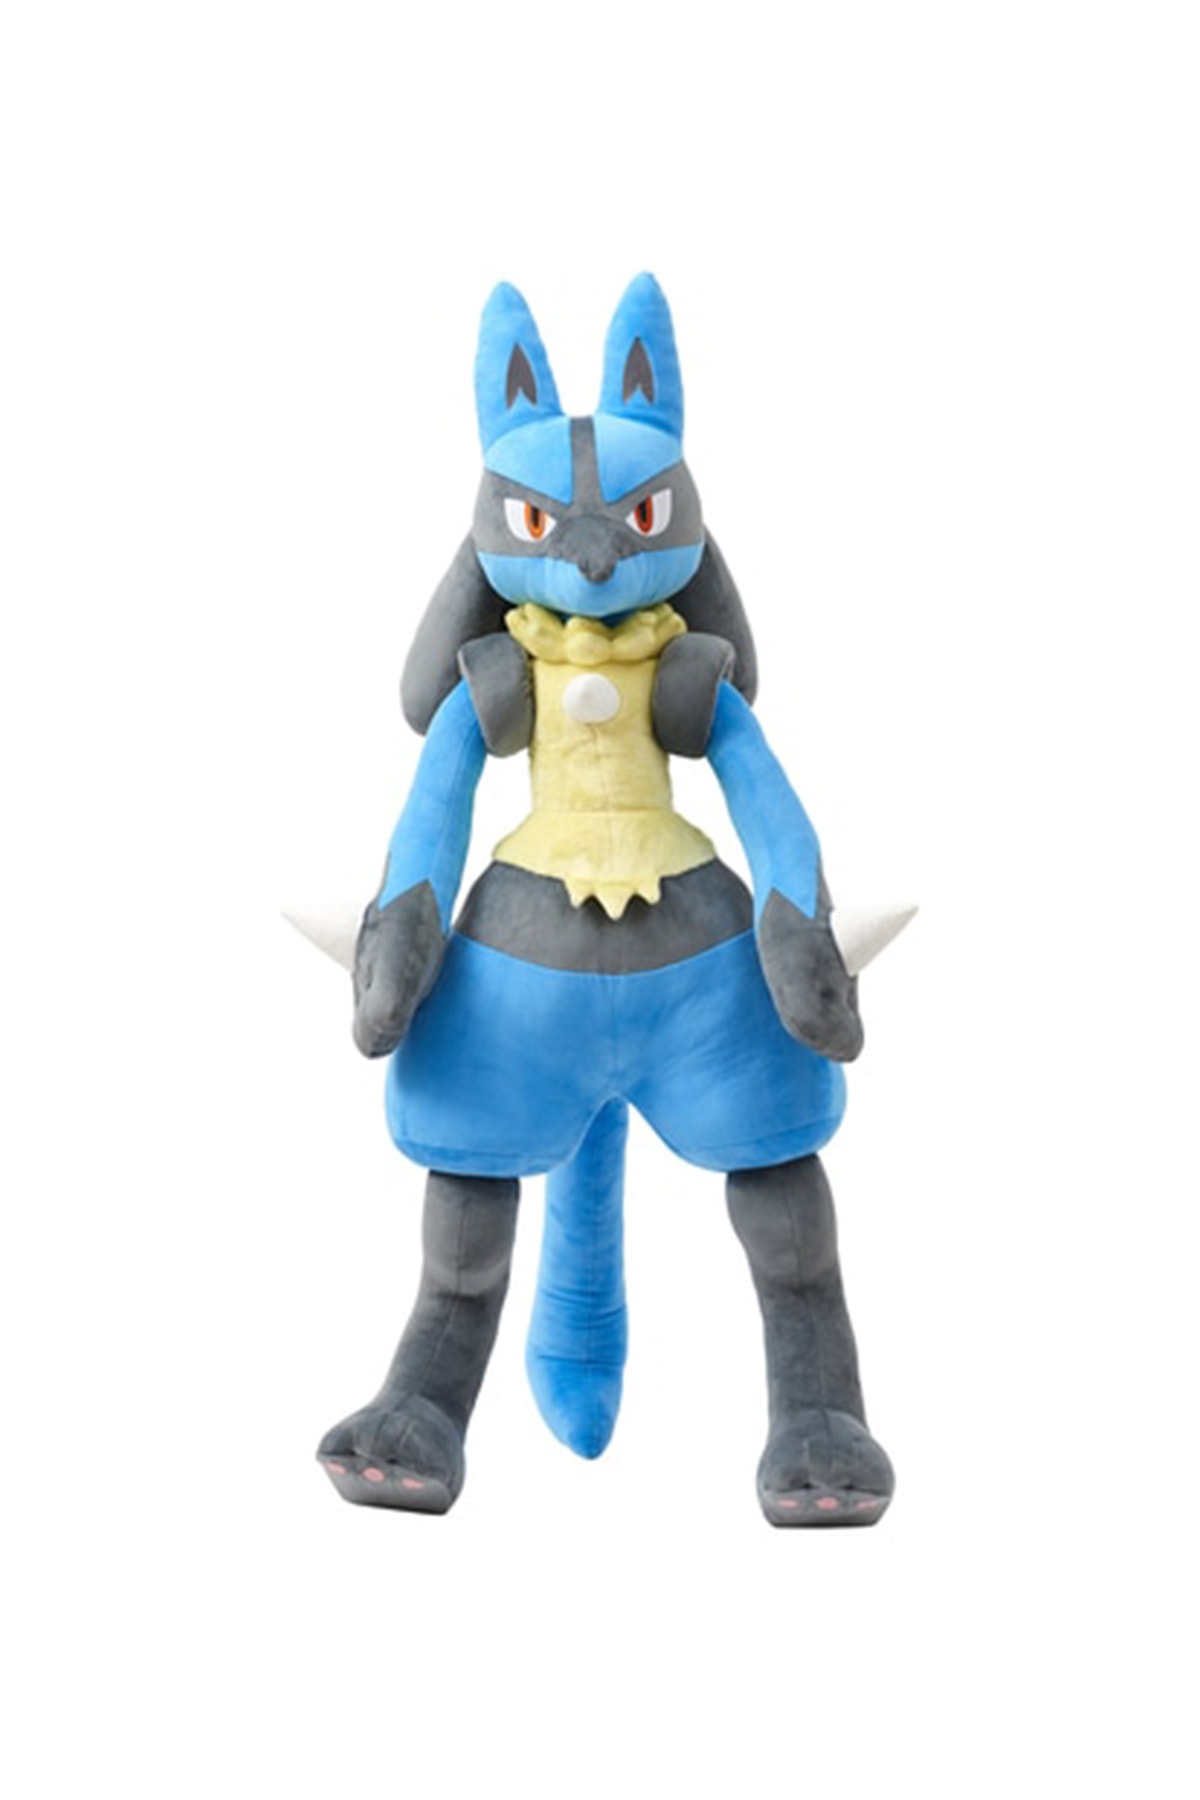 Pokémon 官方推出 1:1 尺寸等身「Lucario 路卡利歐」毛絨玩偶